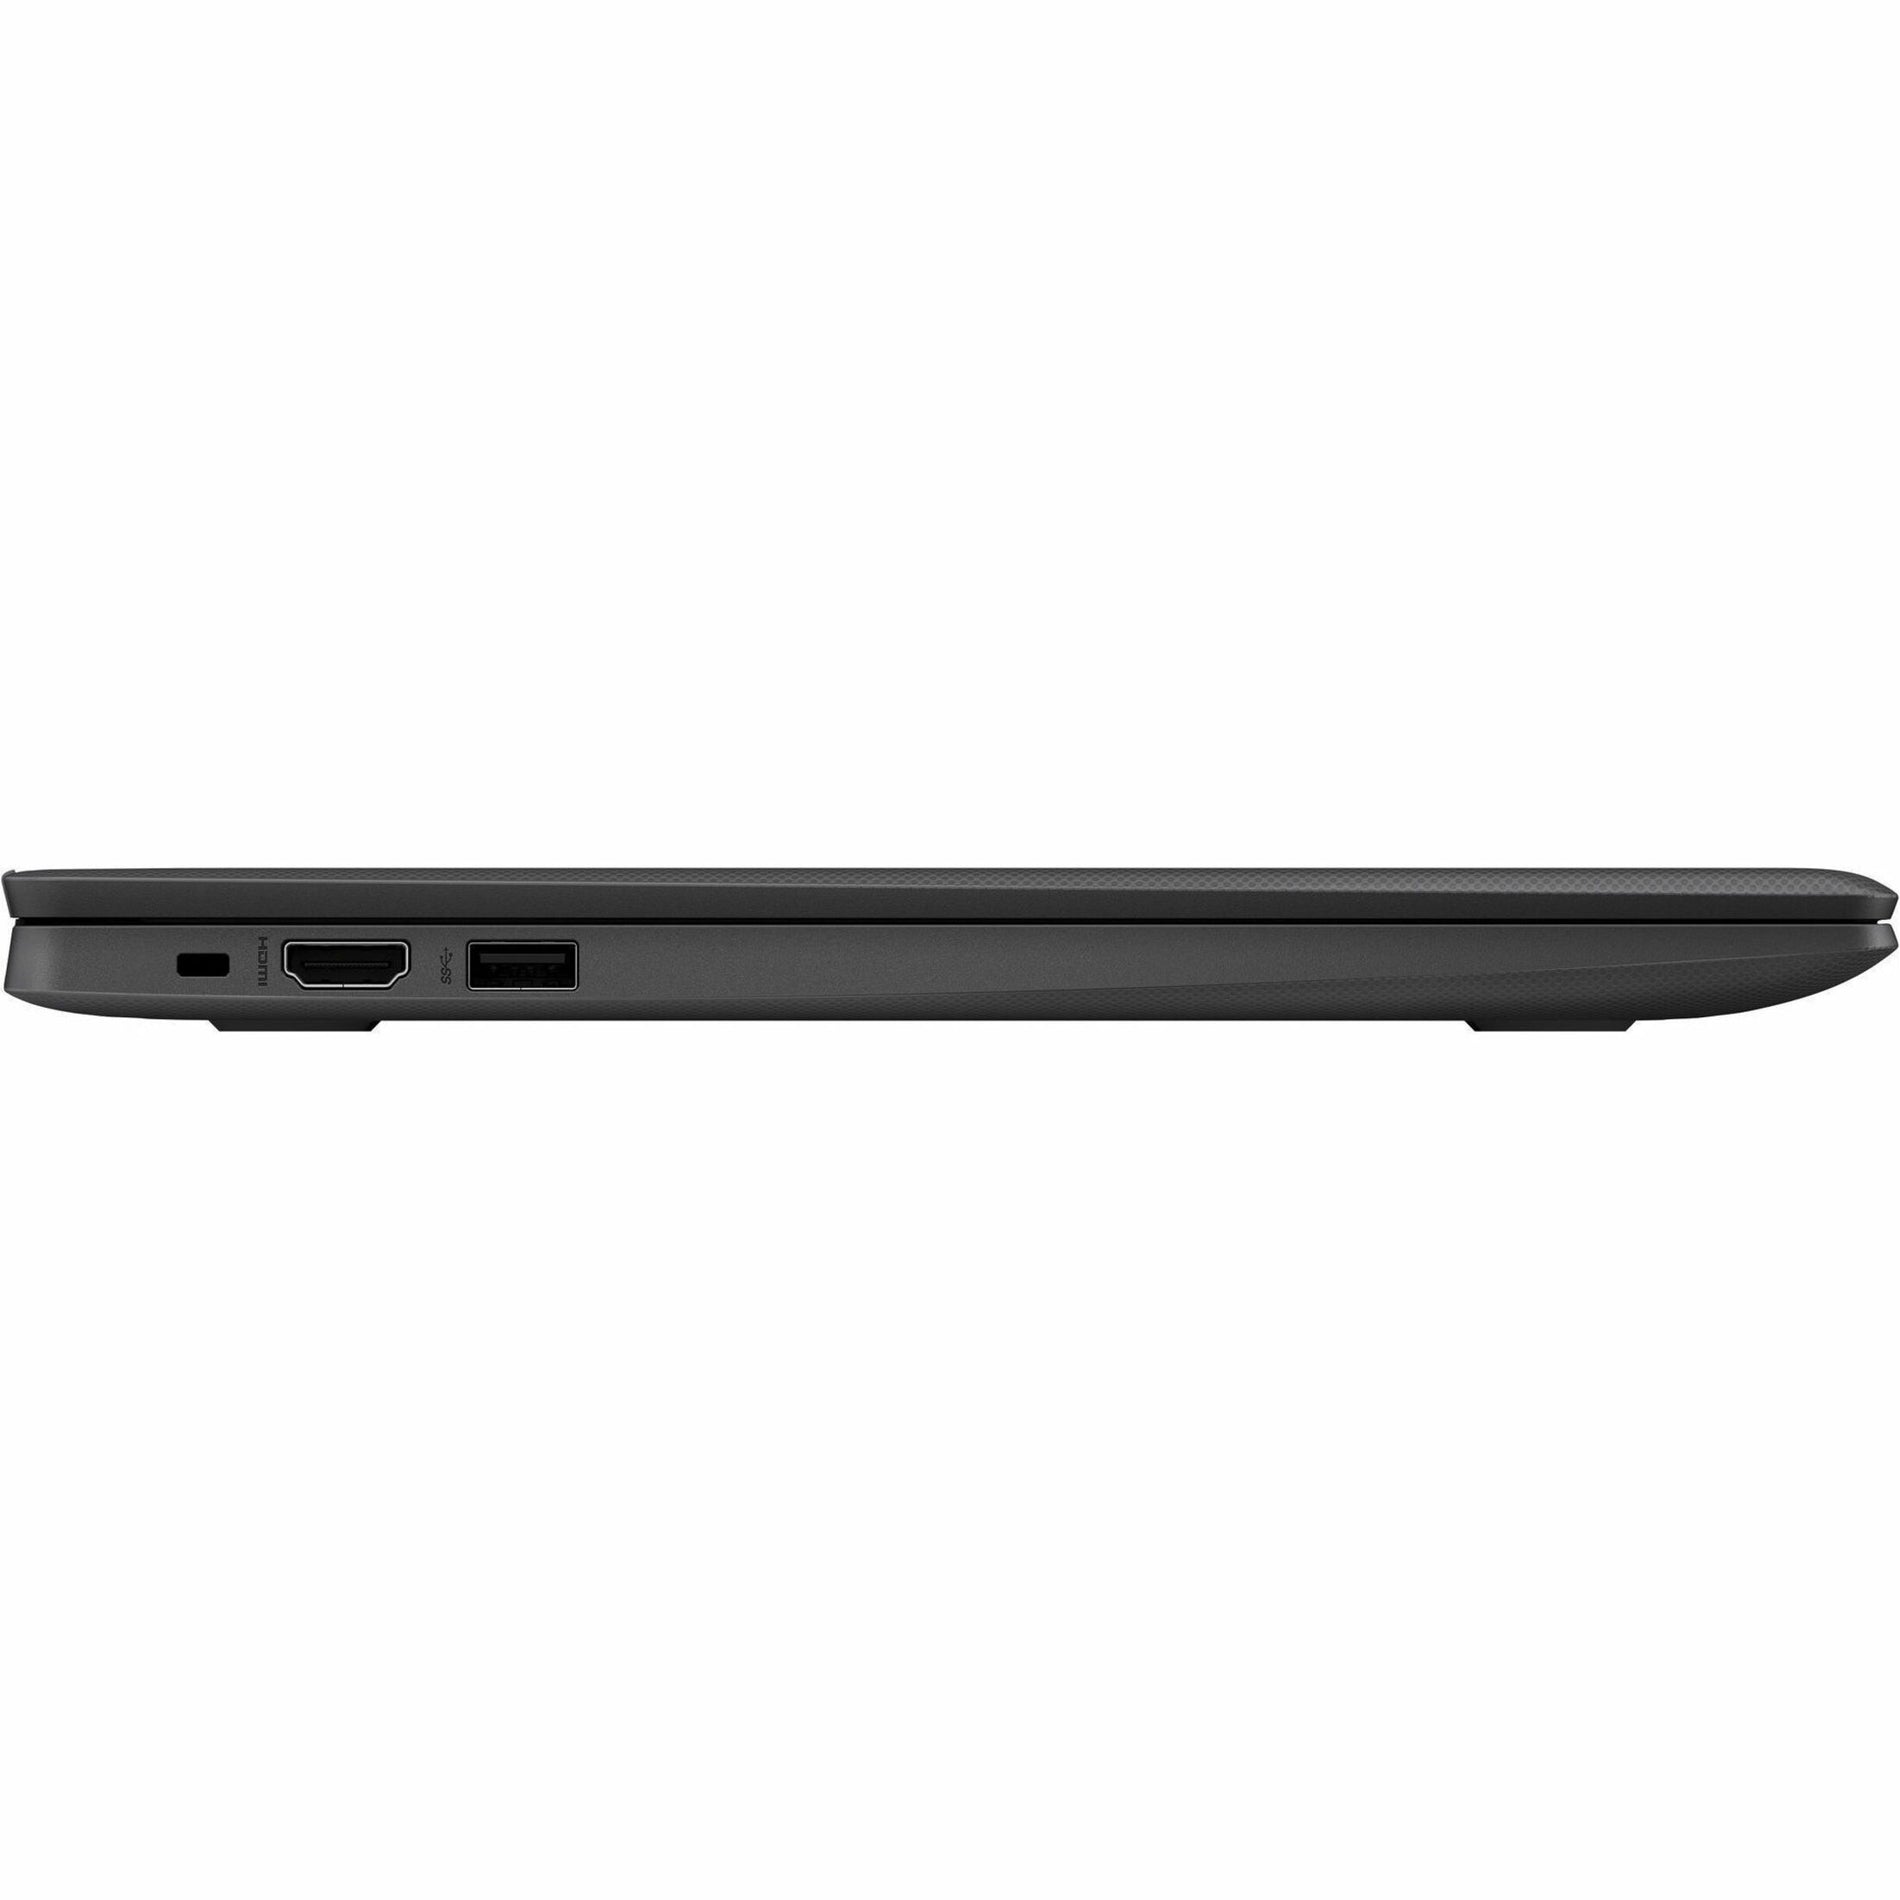 HPI SOURCING - NEW Chromebook 14 G6 14" Chromebook, HD, Intel Celeron N4020 Dual-core, 4GB RAM, 32GB Flash Memory, Chalkboard Gray